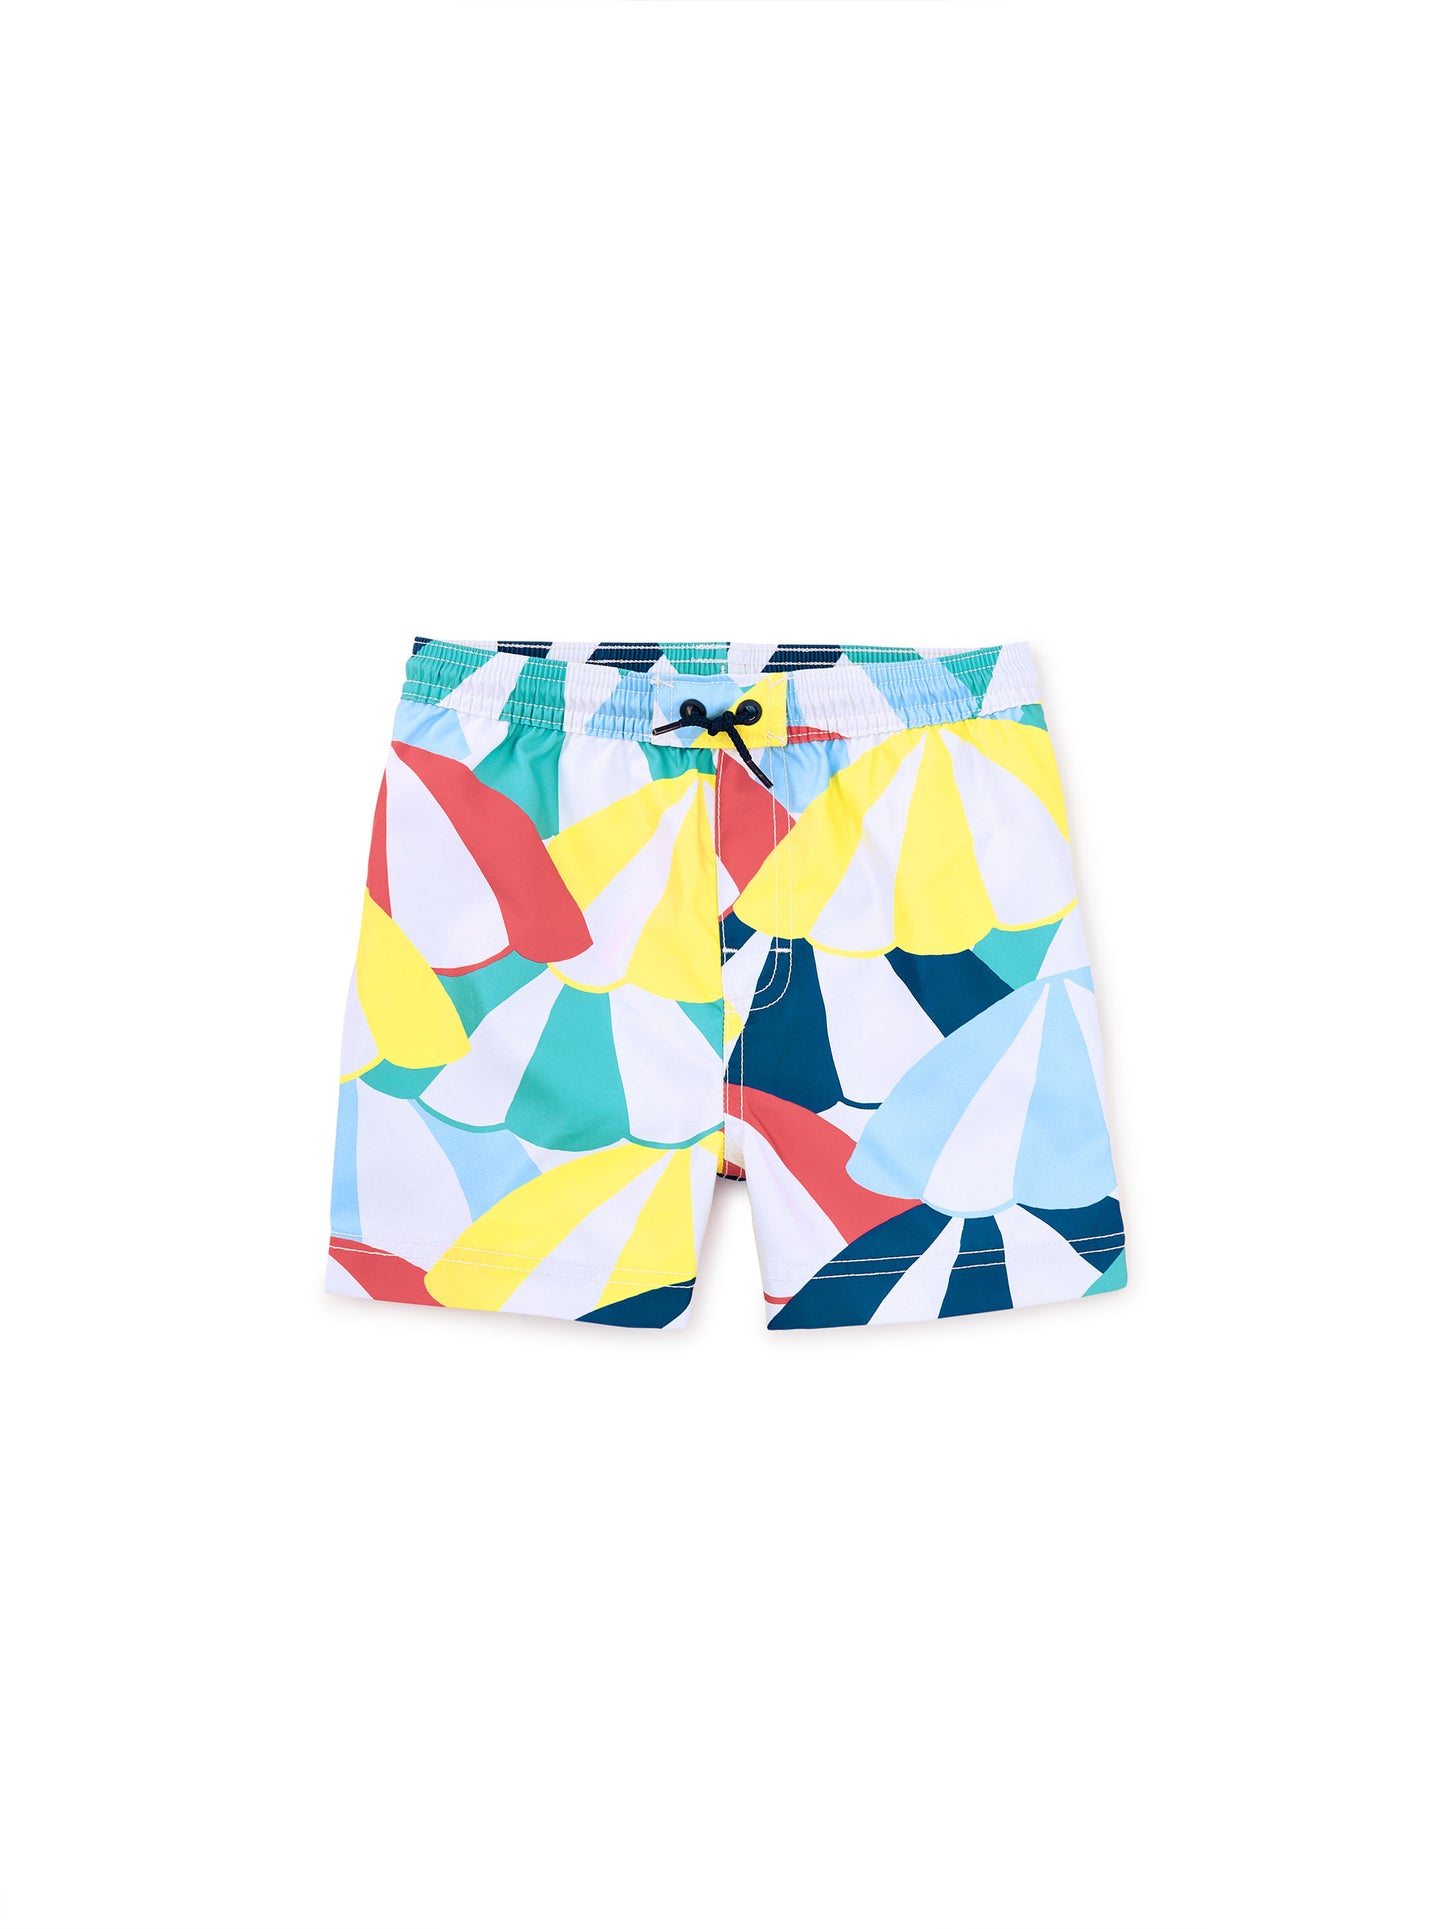 Tea Beach Umbrella | Shortie Swim Trunks